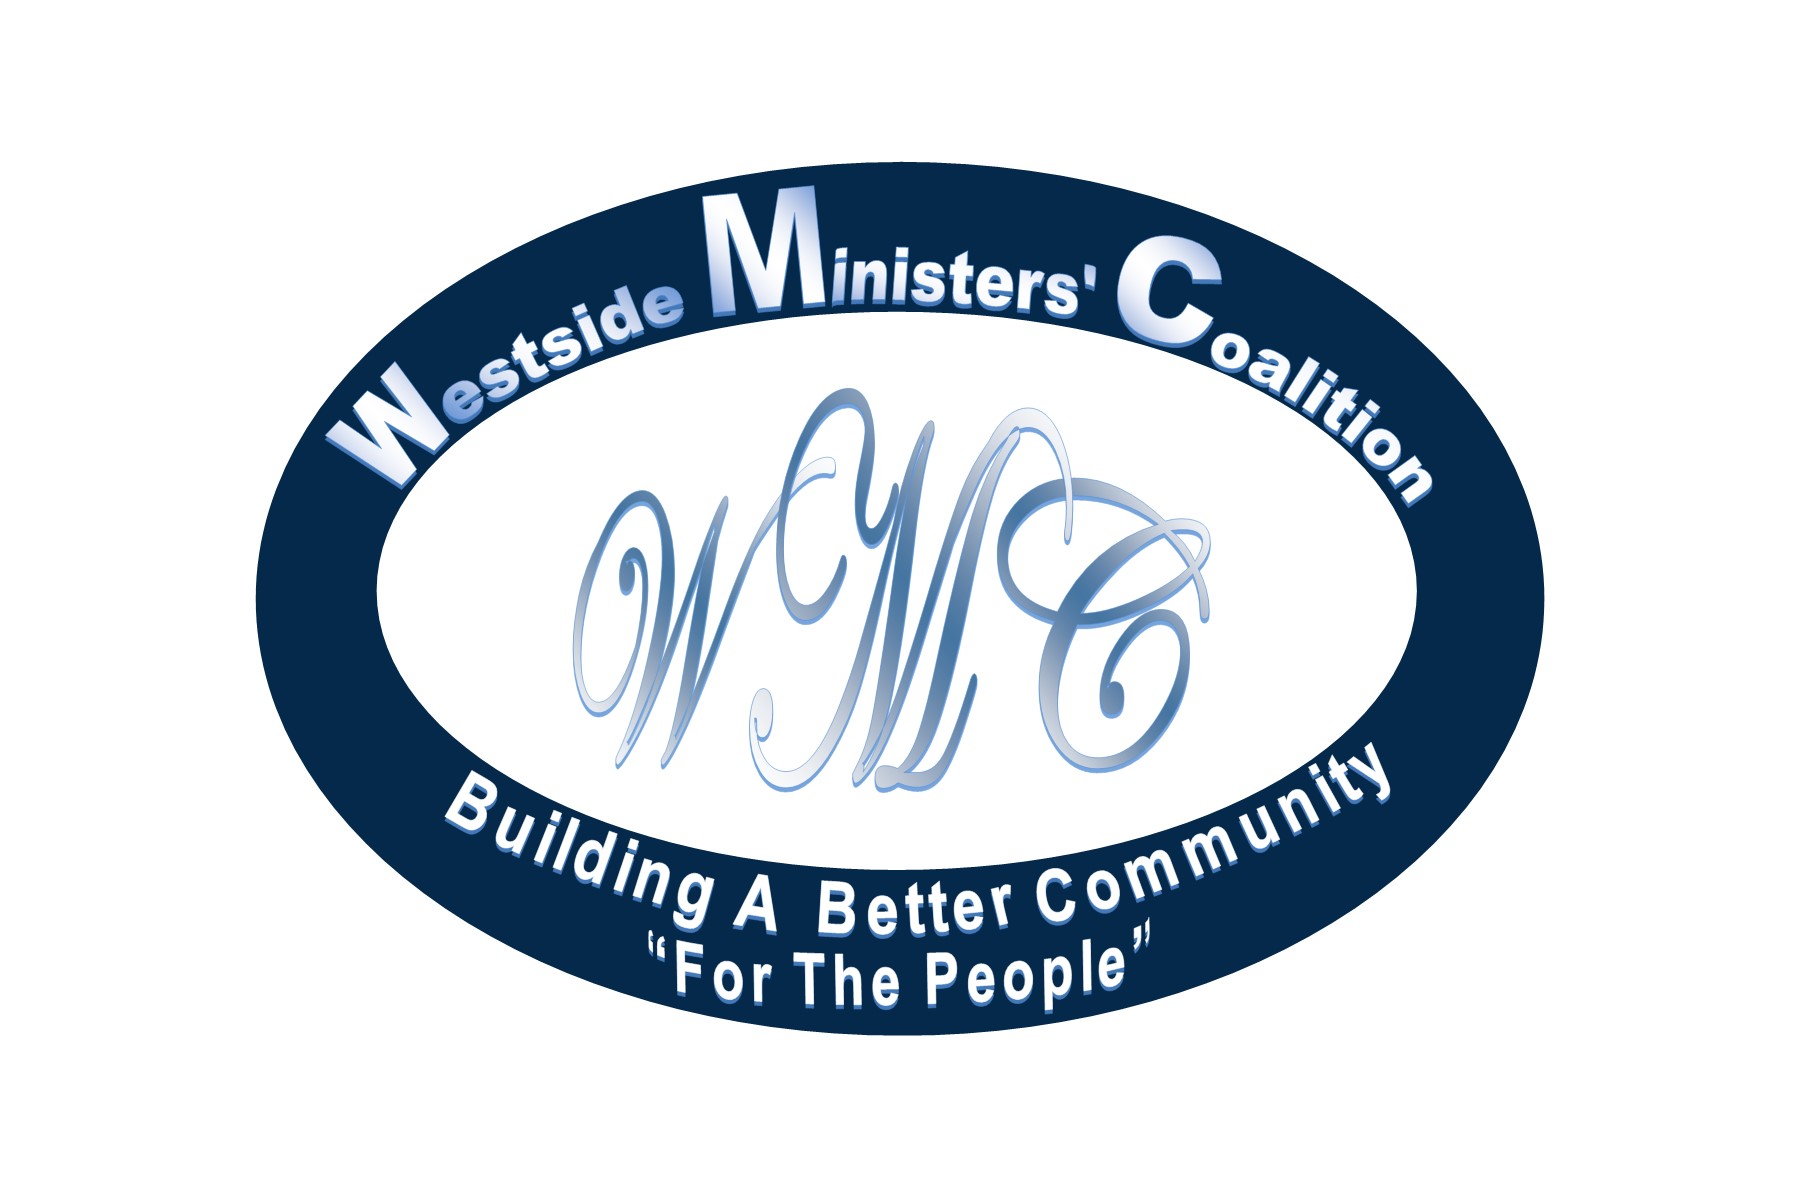 Westside Ministers Coalition